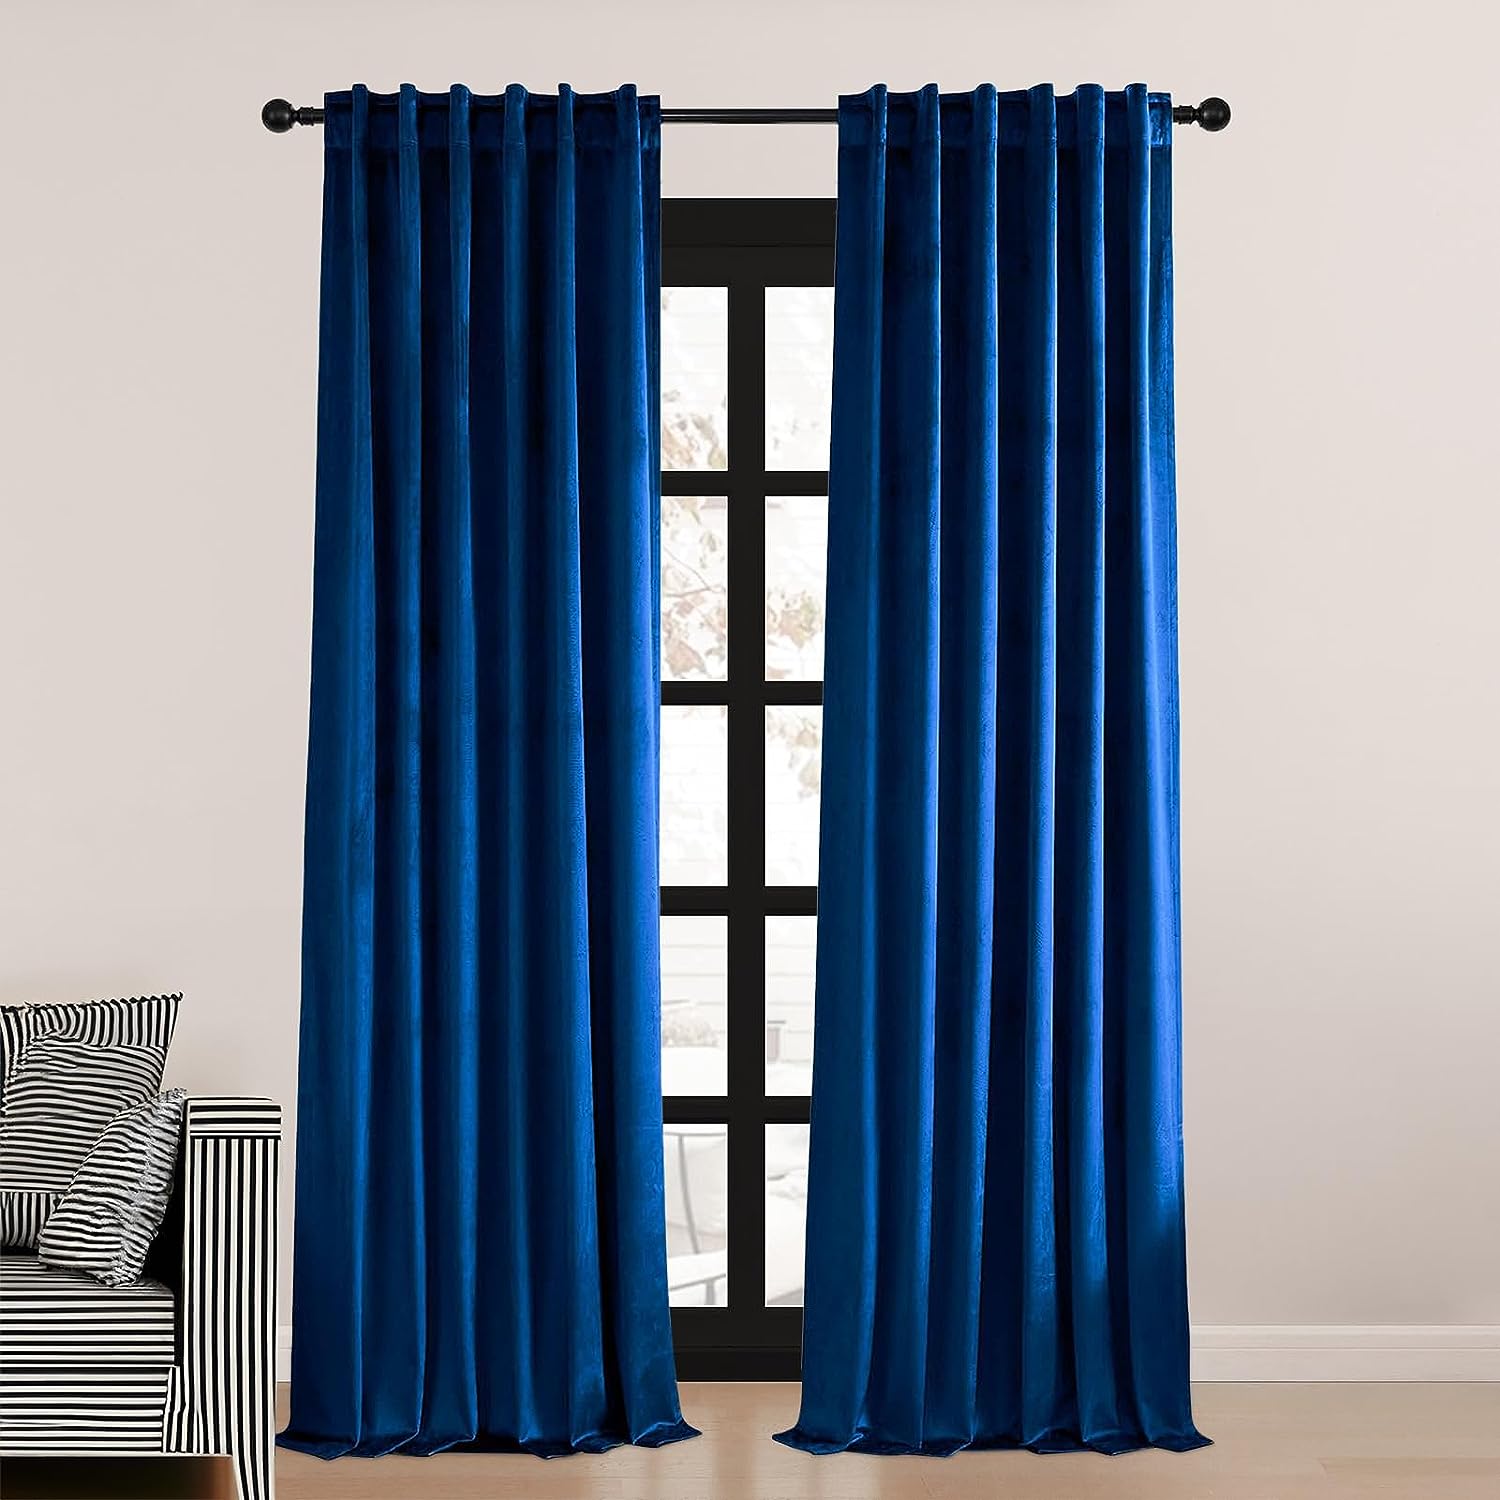 Extra Long Dark Blue Velvet Curtains 108 Inches Length 2 Panels Burg for Living Room Luxury Boho Retro Home Decor Room Darkening Curtains 108 Inches Long for Bedroom/Villa,W52 x L108,Royal Blue